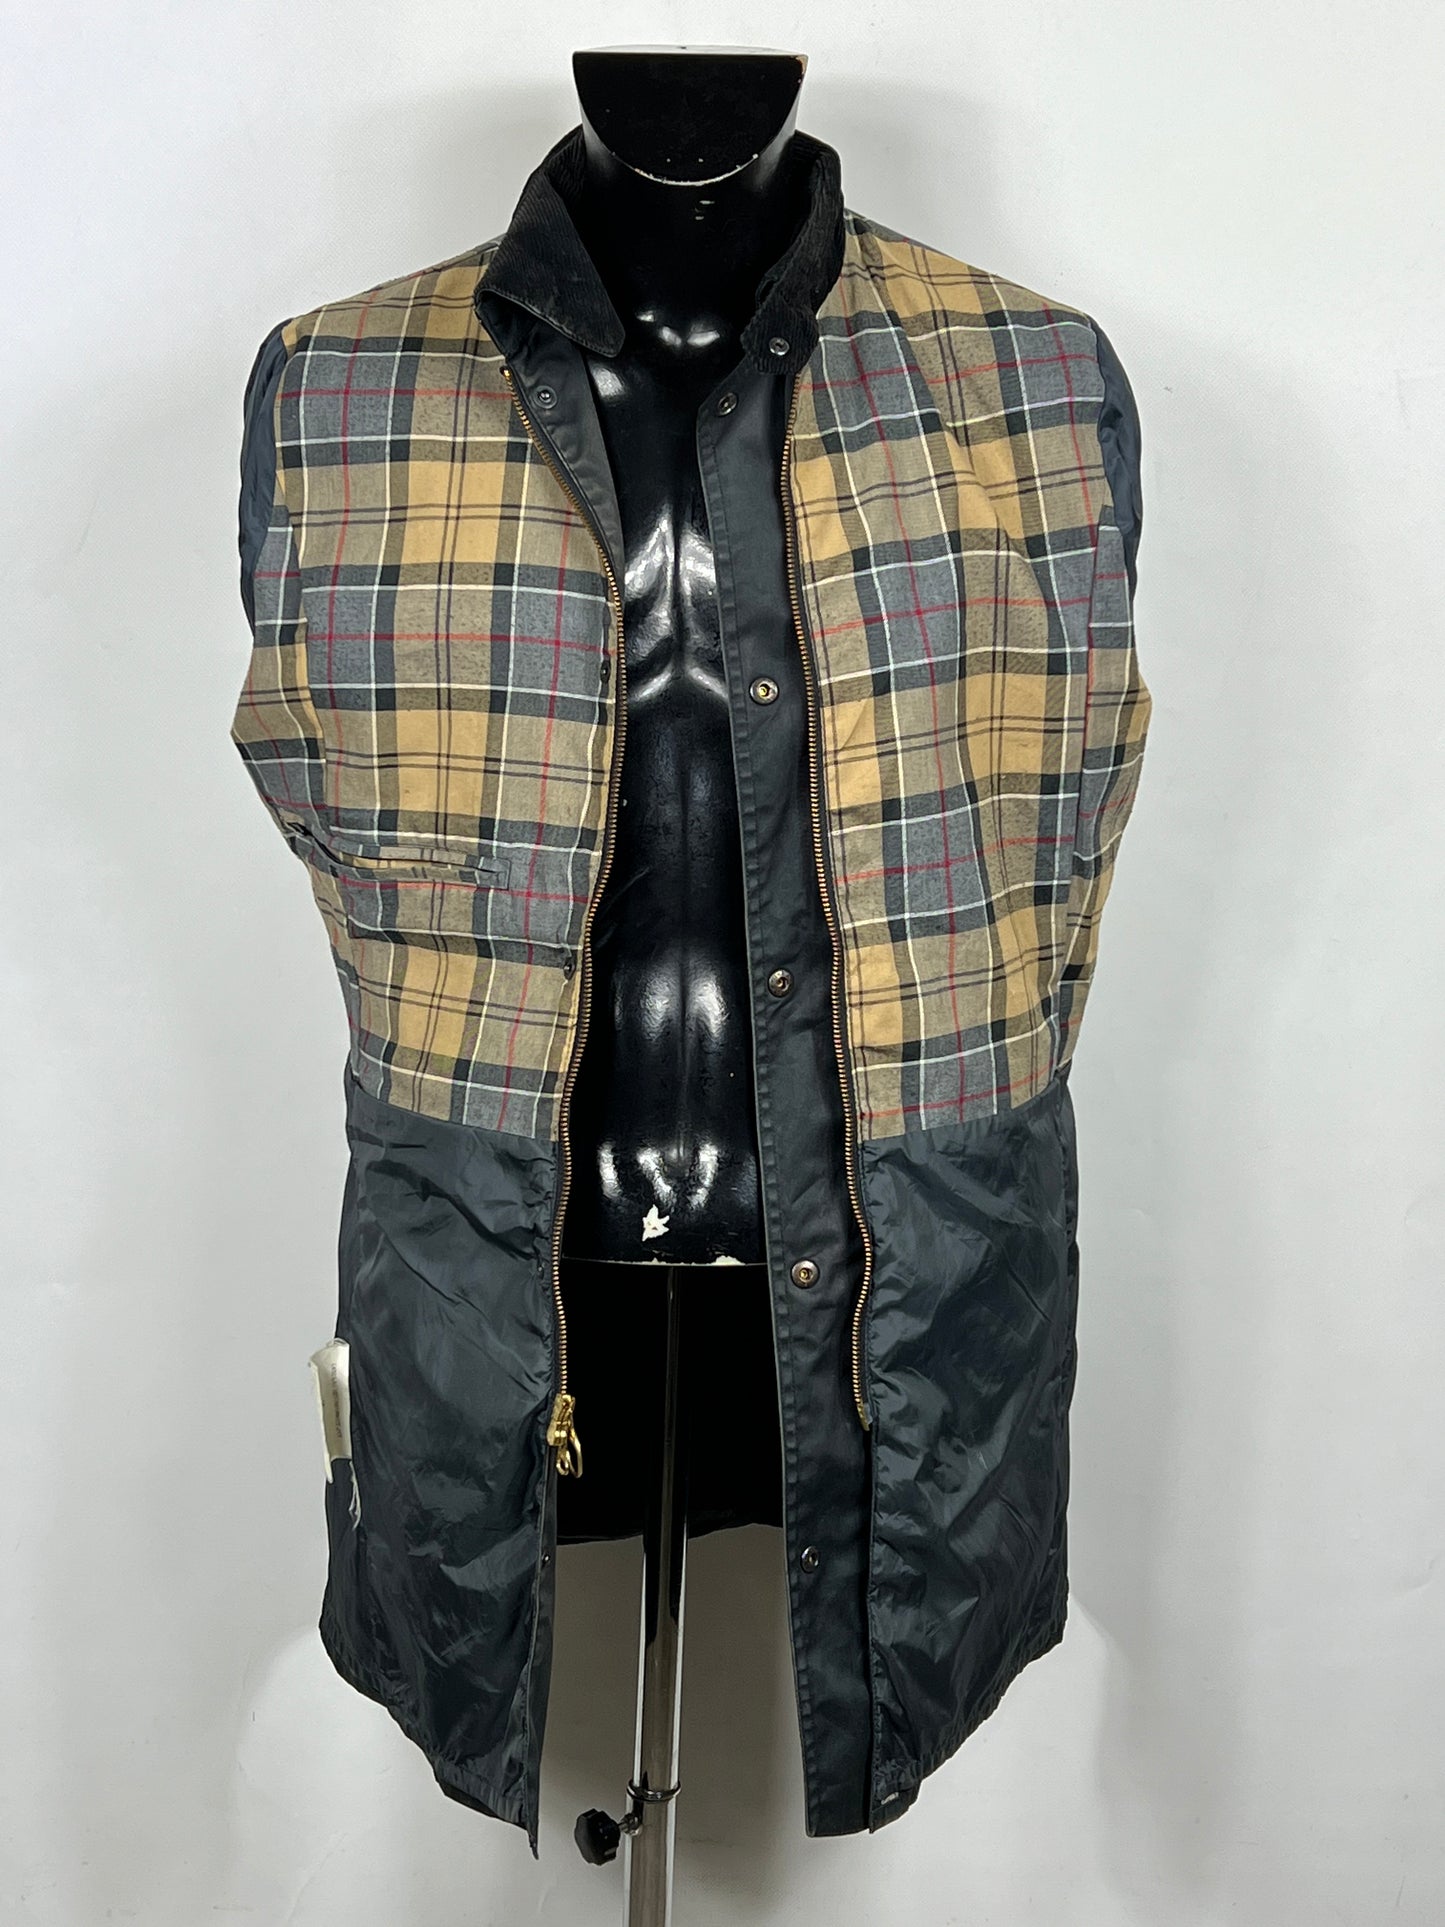 Giacca Barbour donna cotone nero Newmarket Recente UK14 Tg.42- Black cotton Jacket